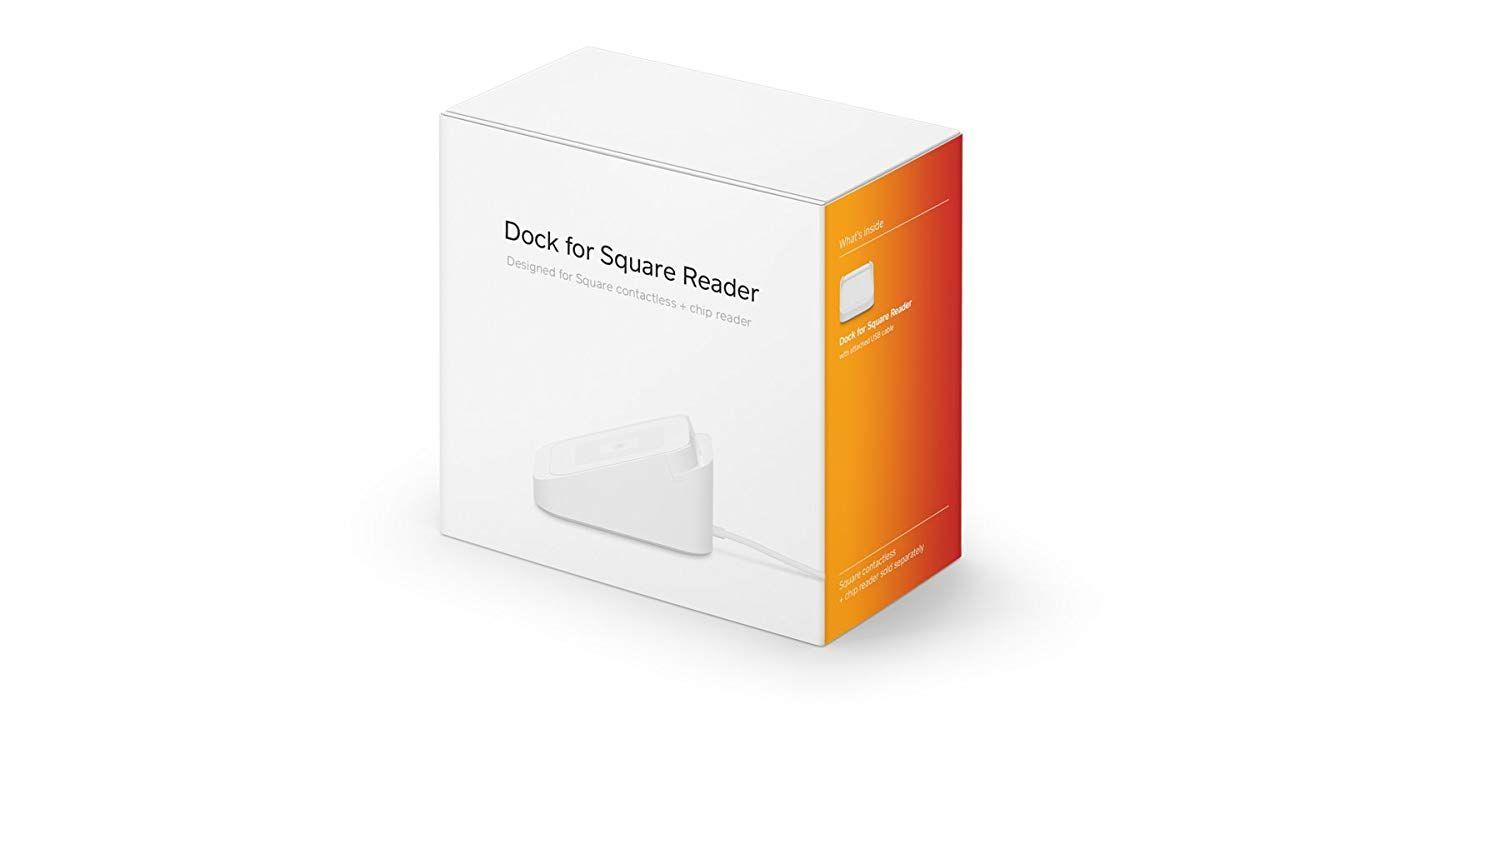 Square Reader Logo - Amazon.com: Square Dock for Reader: Industrial & Scientific